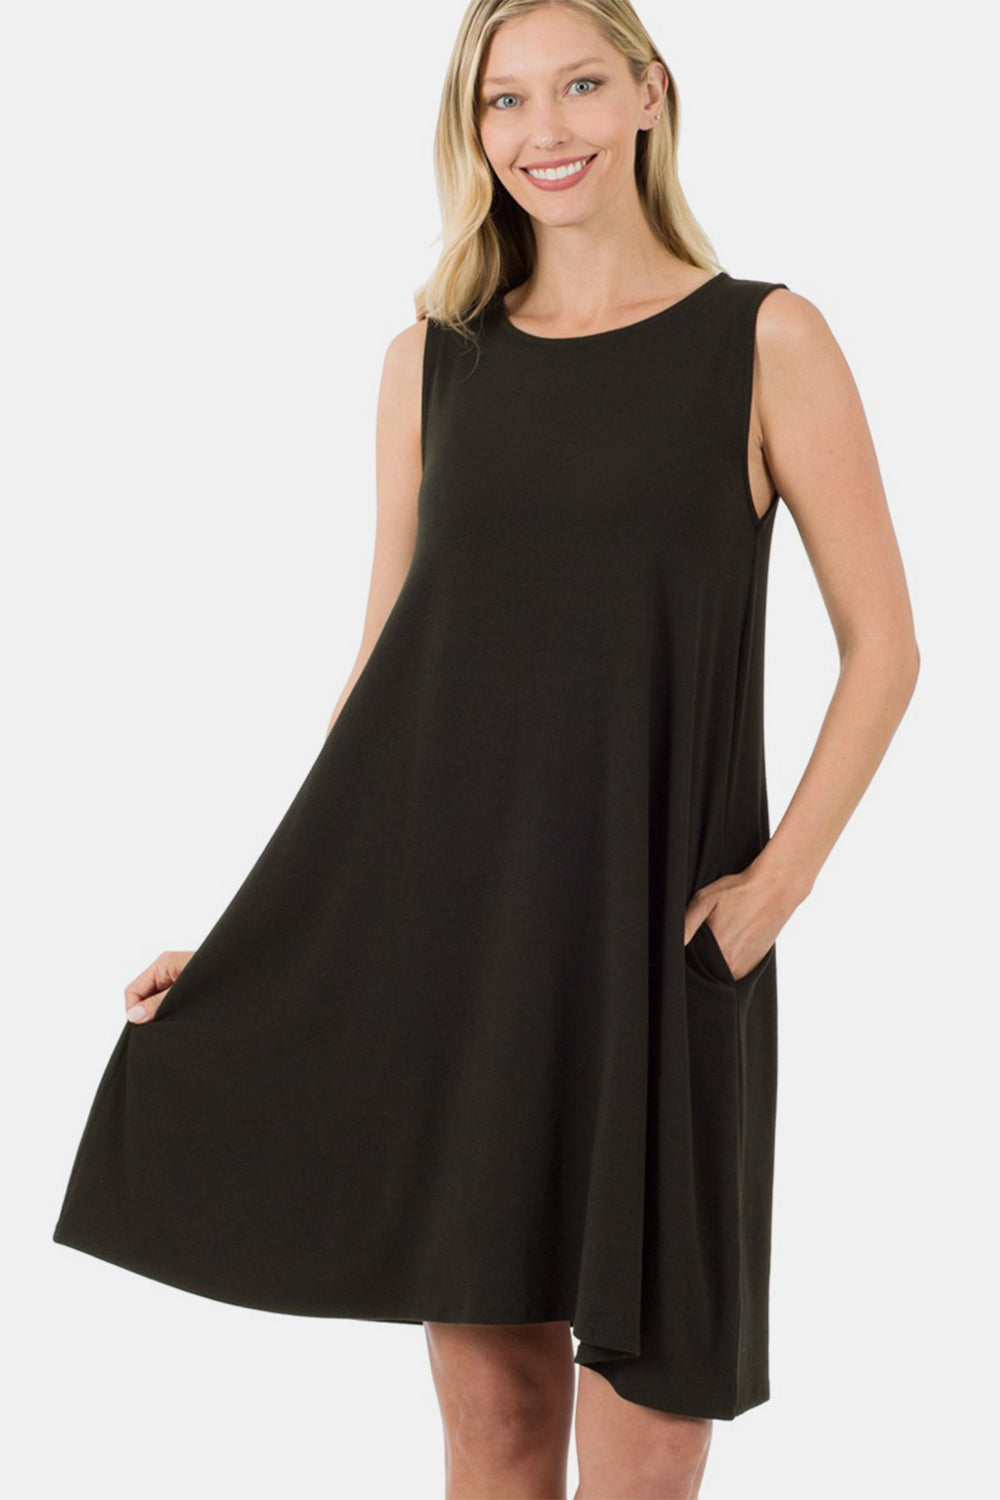 Zenana Black Sleeveless Flared Dress with Side Pockets Black Trendsi